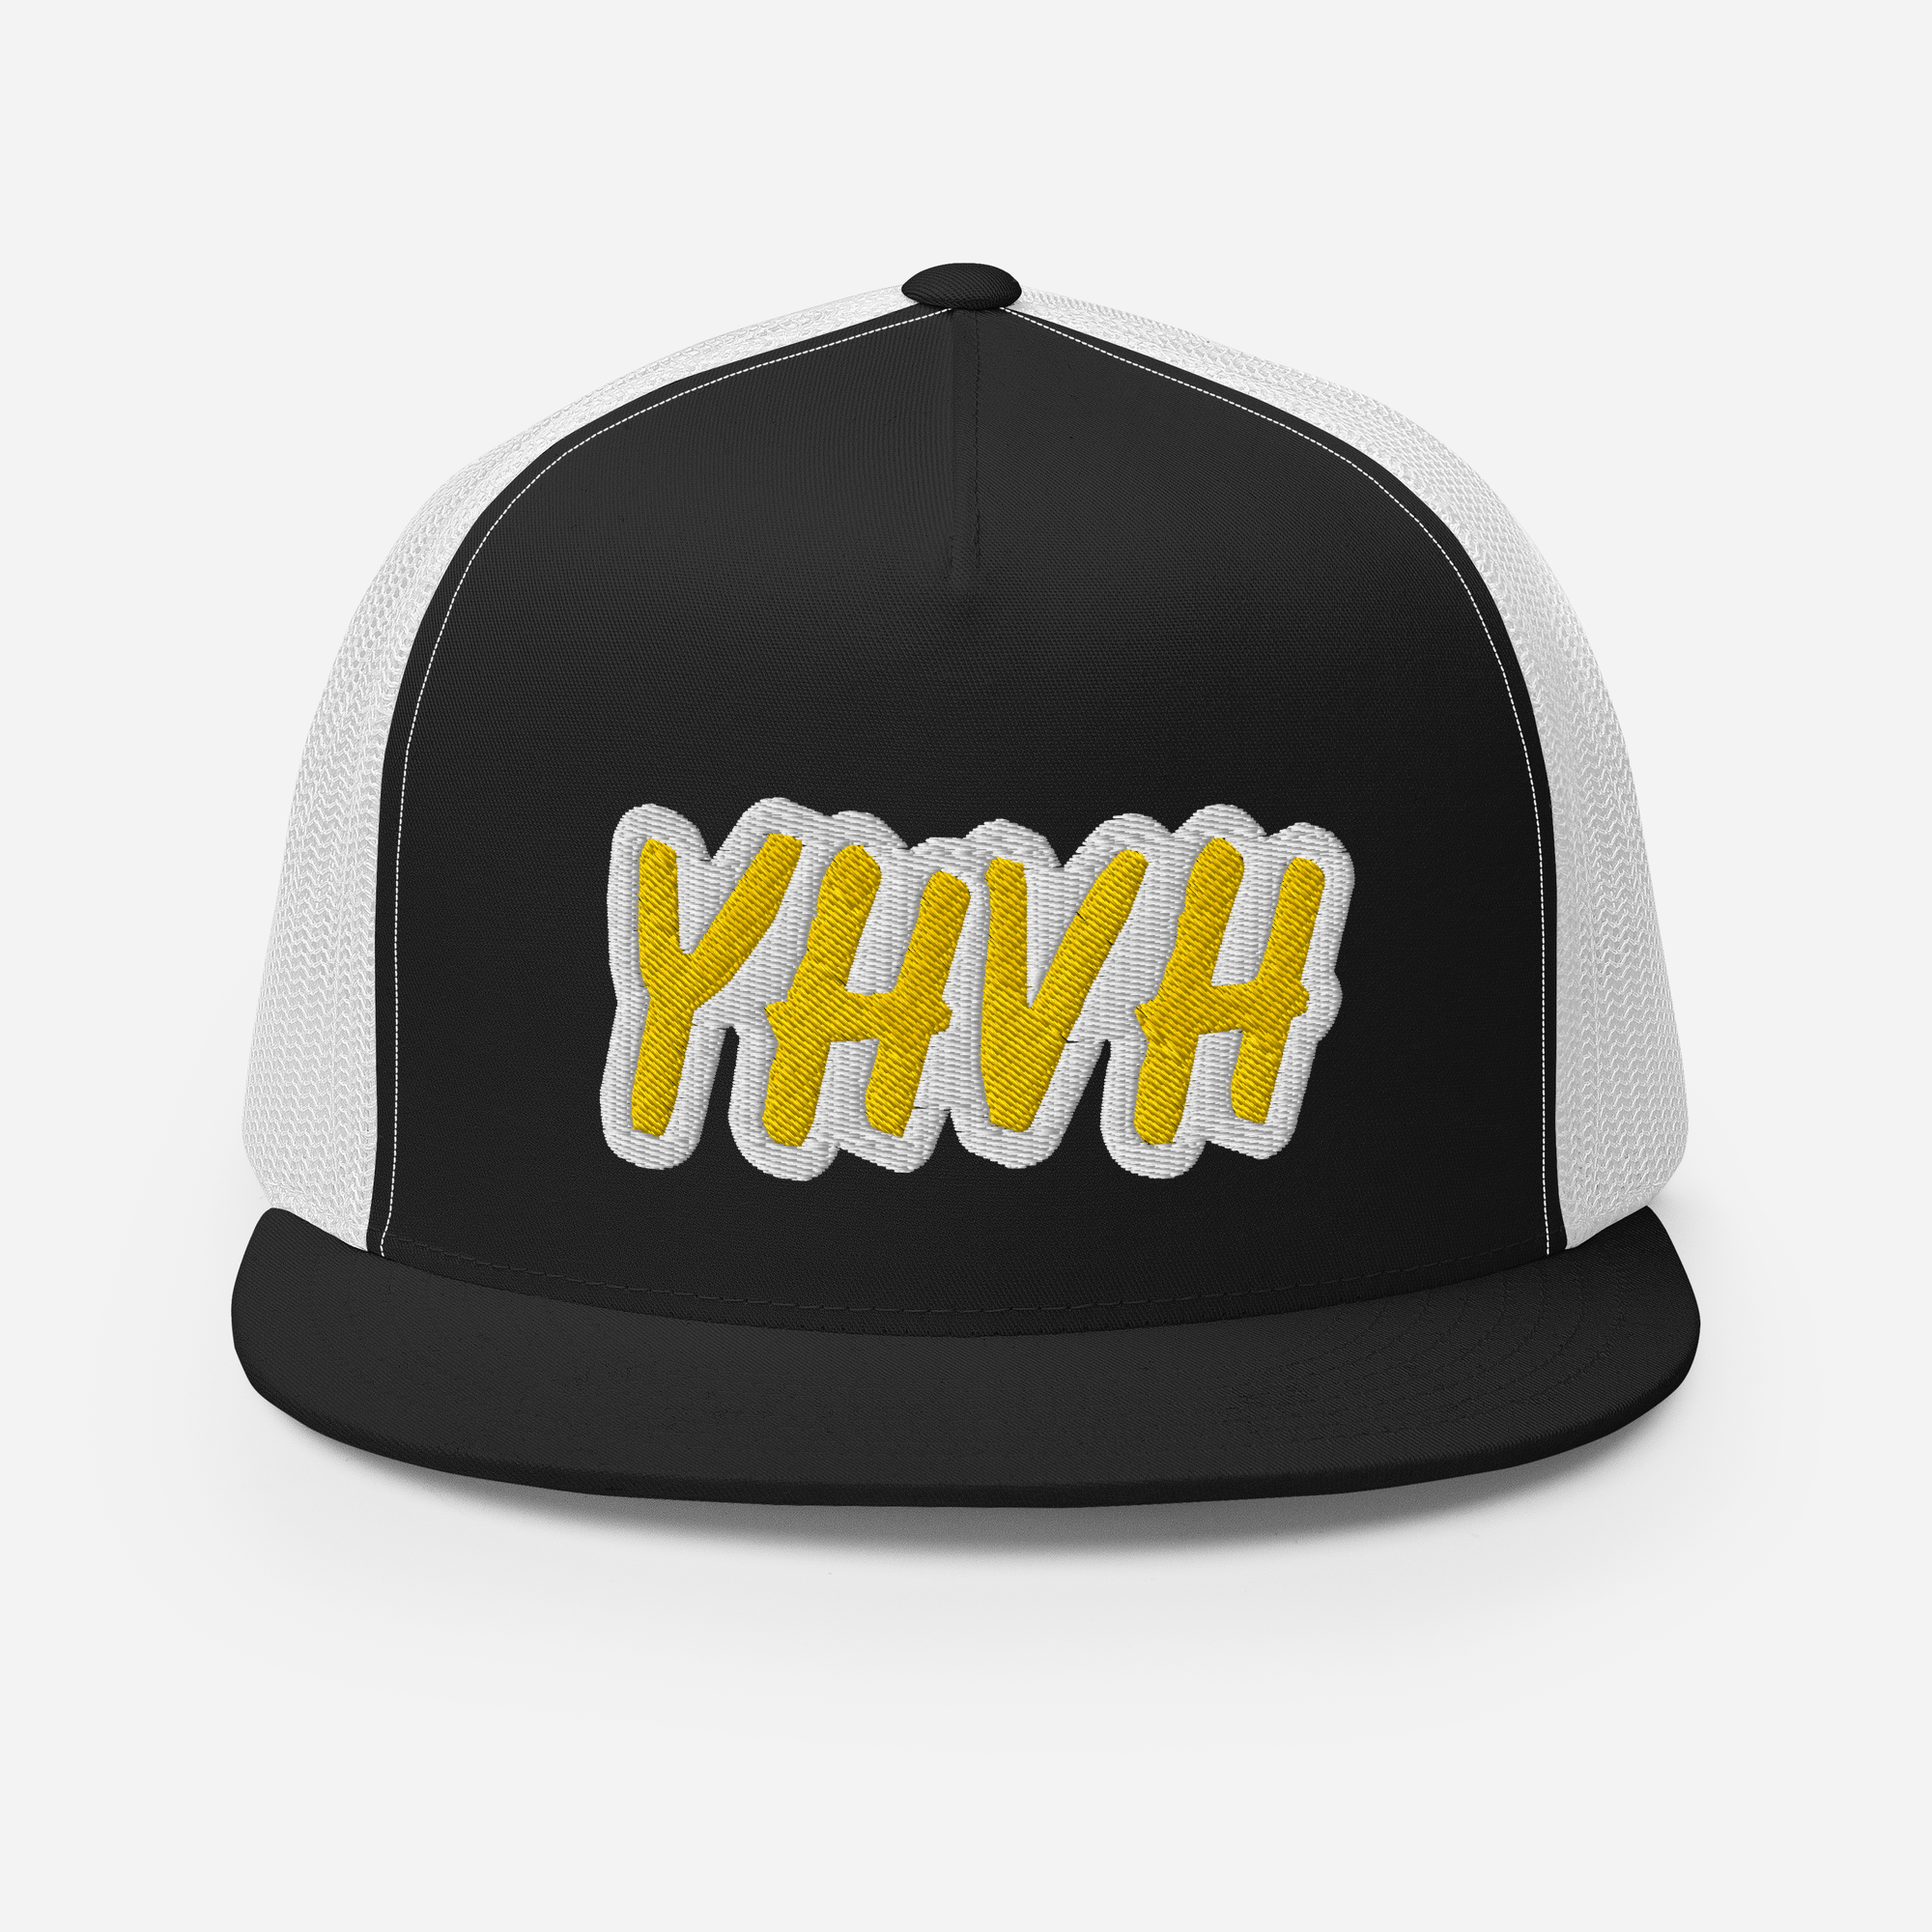 YHVH Trucker Cap